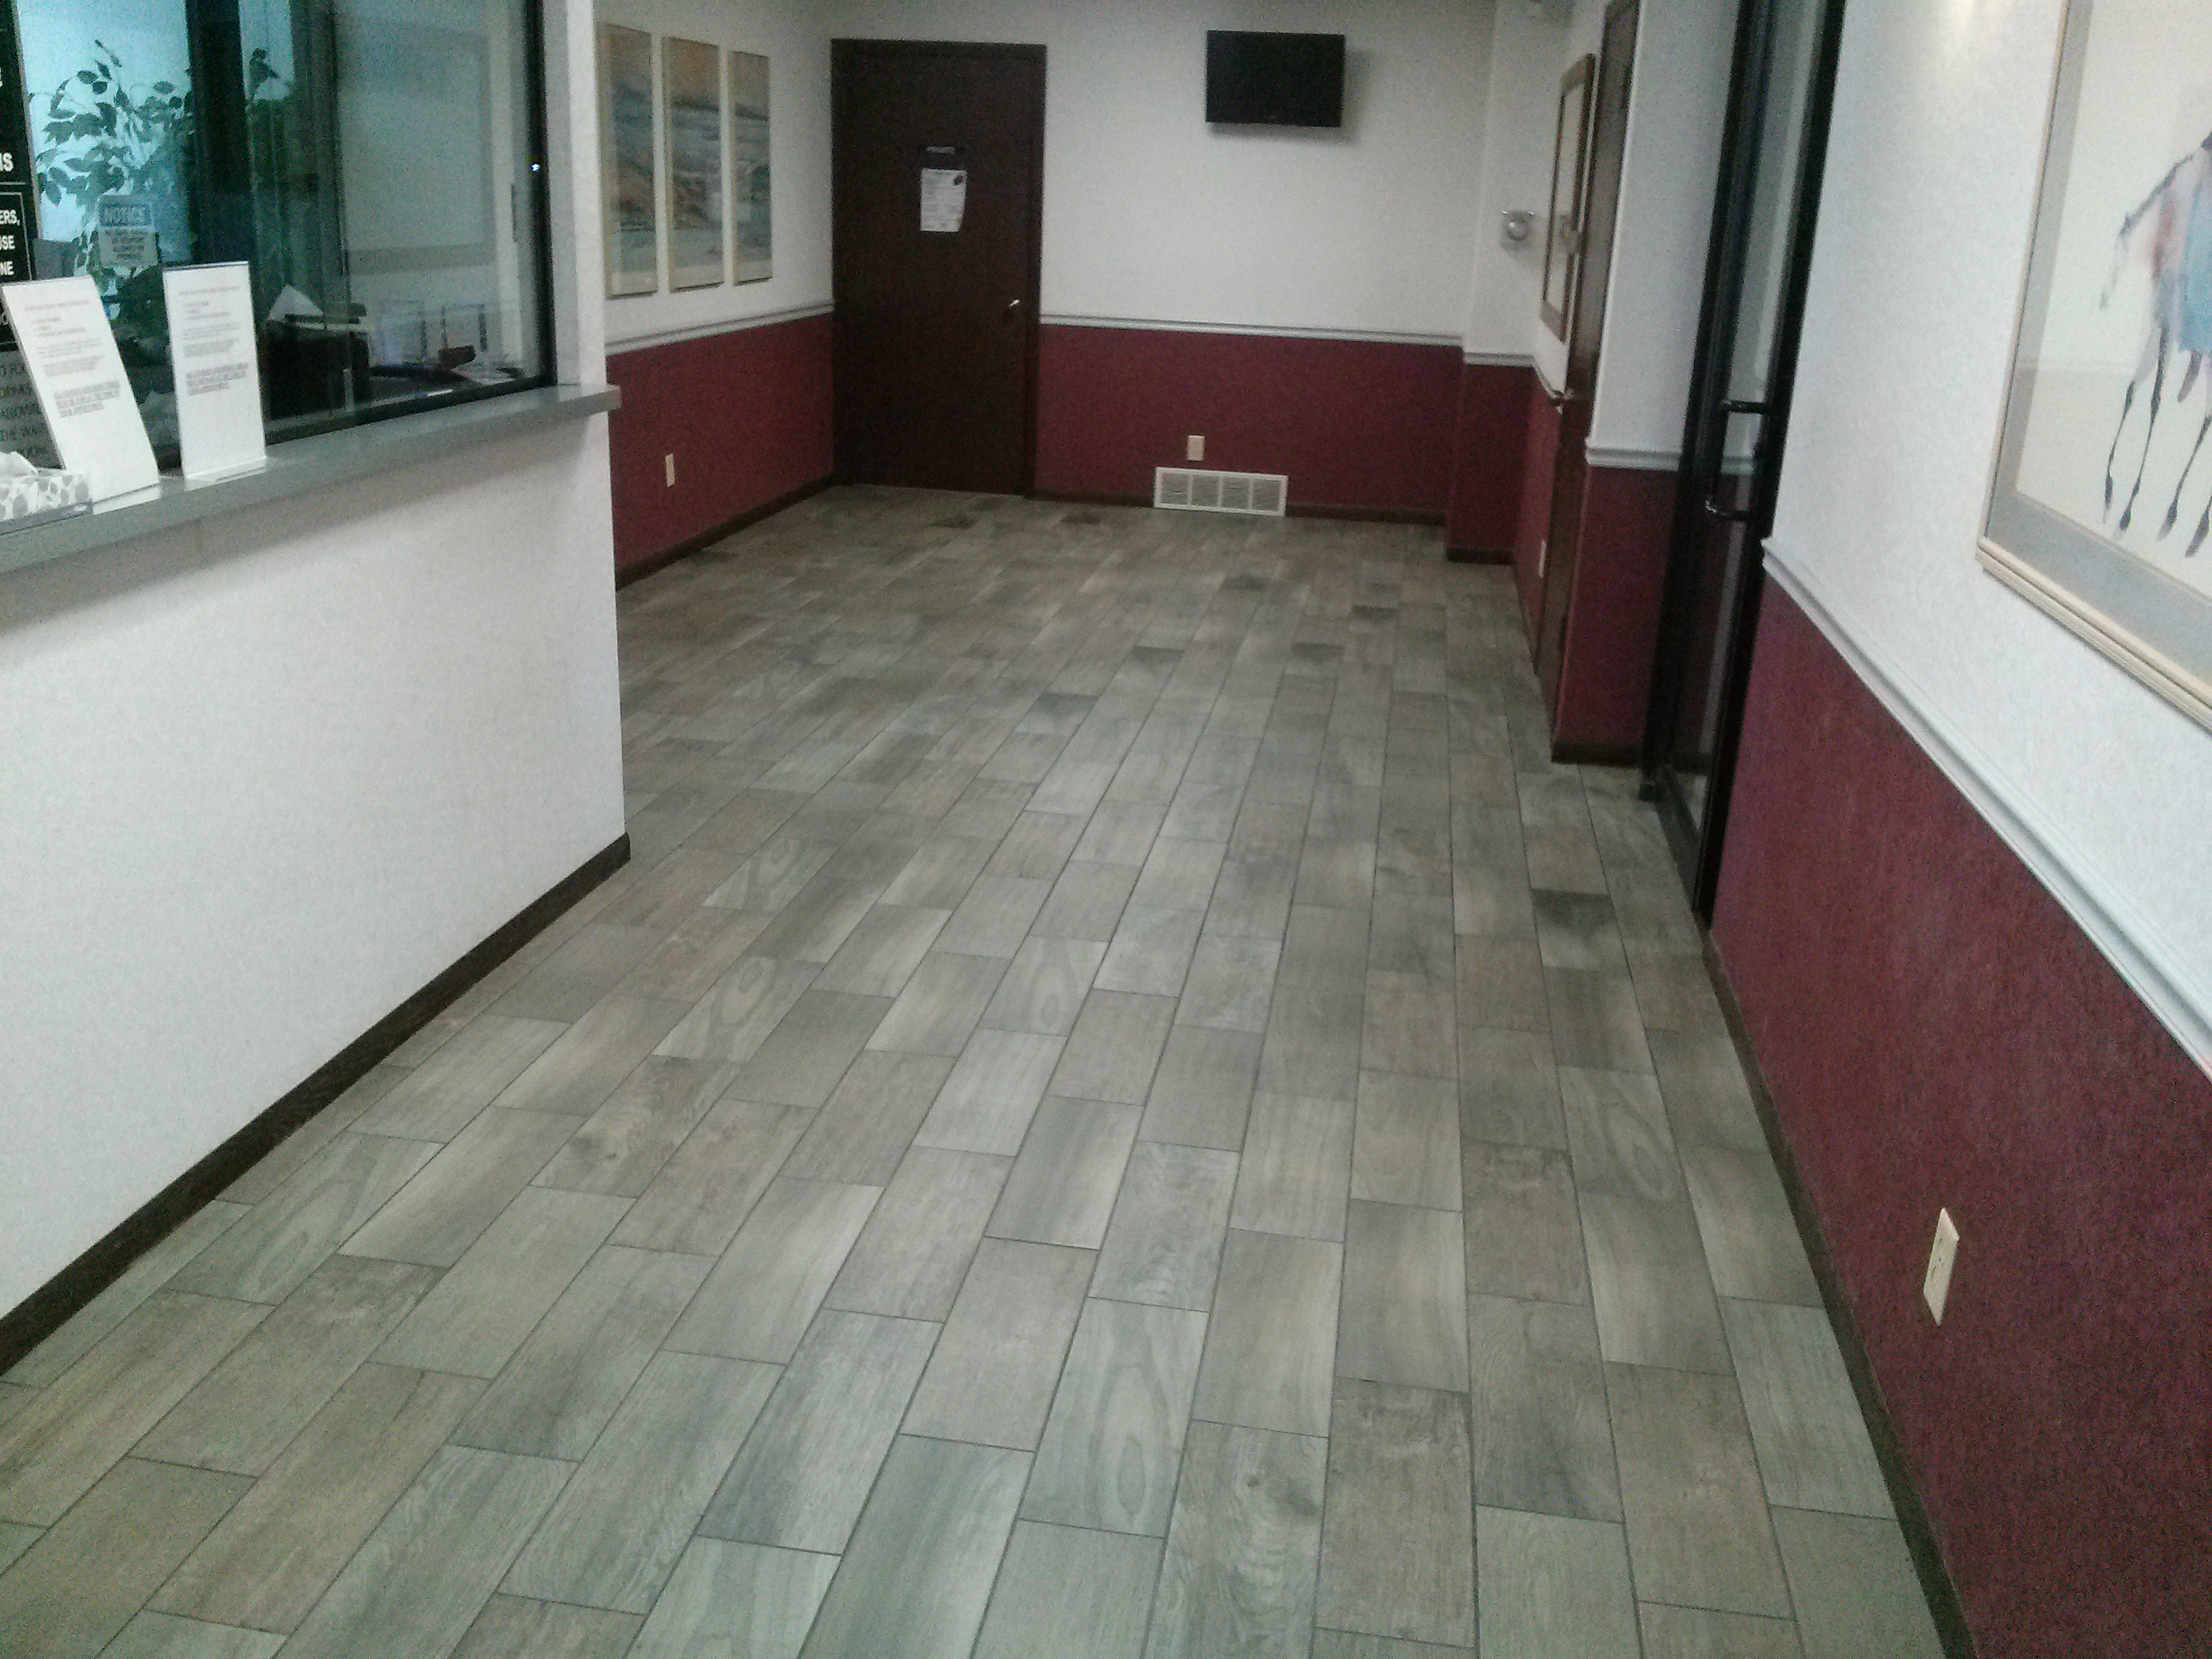 New waiting room floor